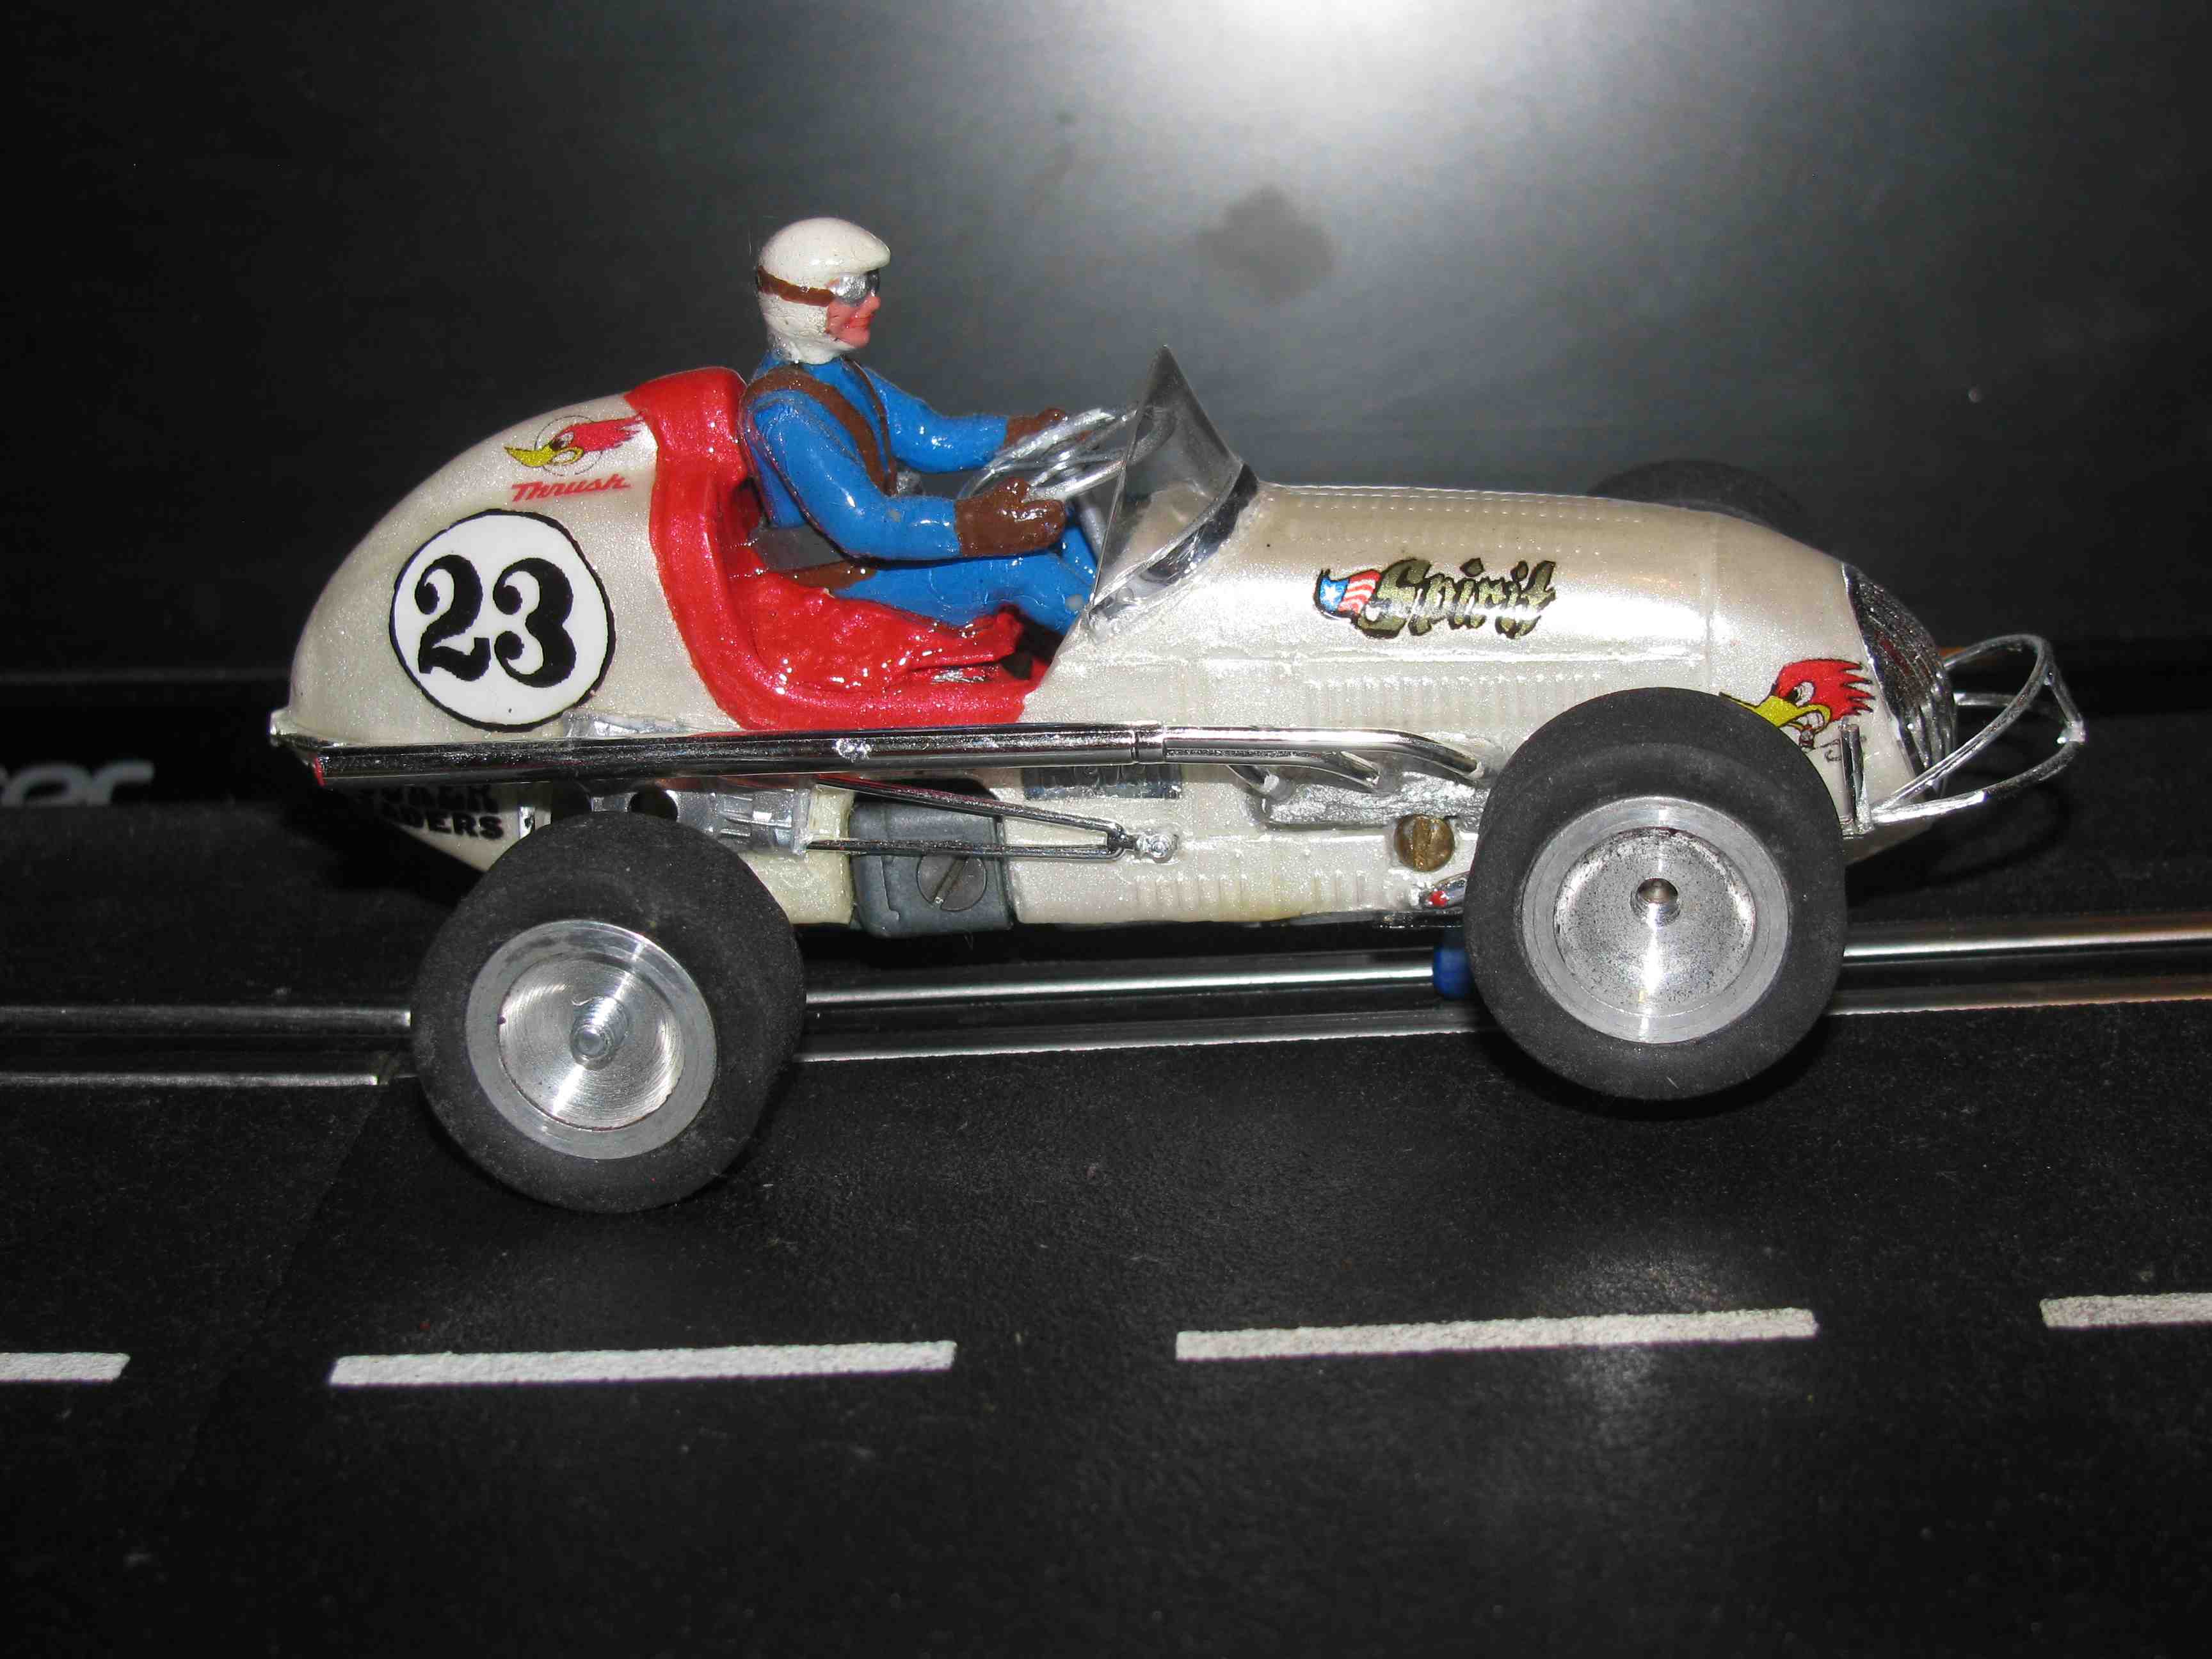 * SOLD * * SALE * Vintage Midget Racer “Spirt of America” – Pearl White Metallic Slot Car 1/32 Scale – Car #23